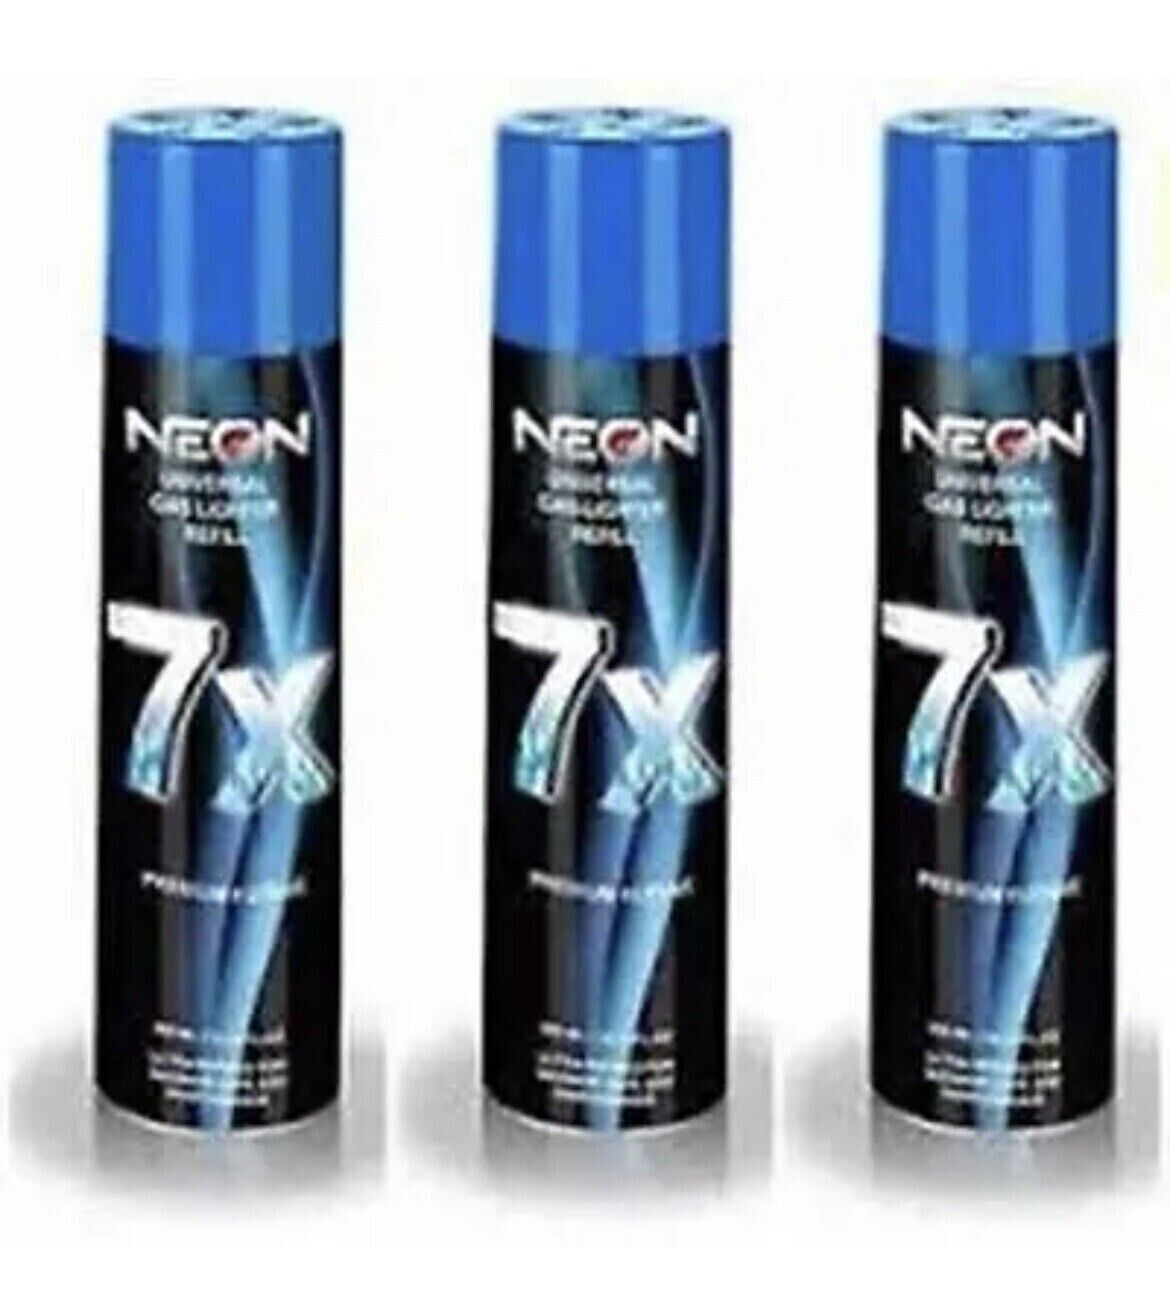 3 Can Neon 7X Refined Butane Lighter Gas Fuel Refill 300 mL /10.14 oZ Cartridge